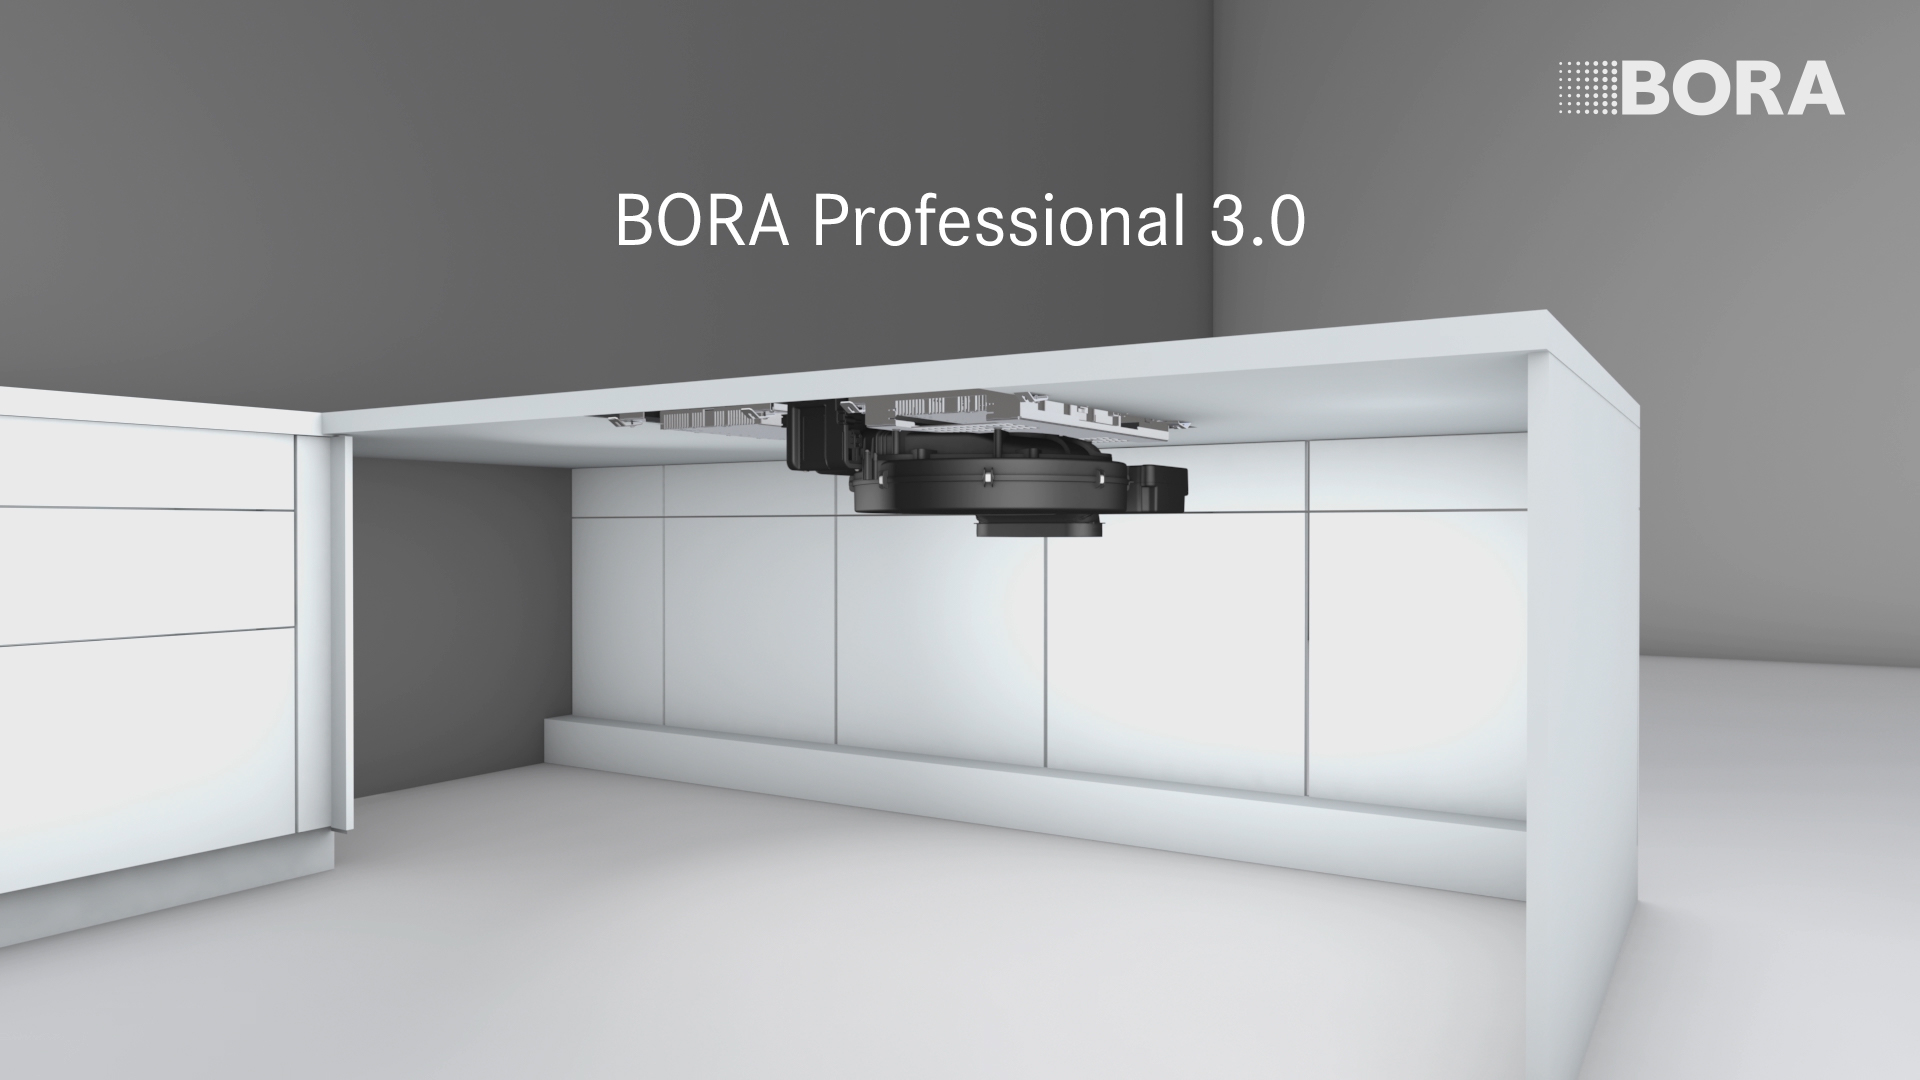 BORA Professional 3.0 system